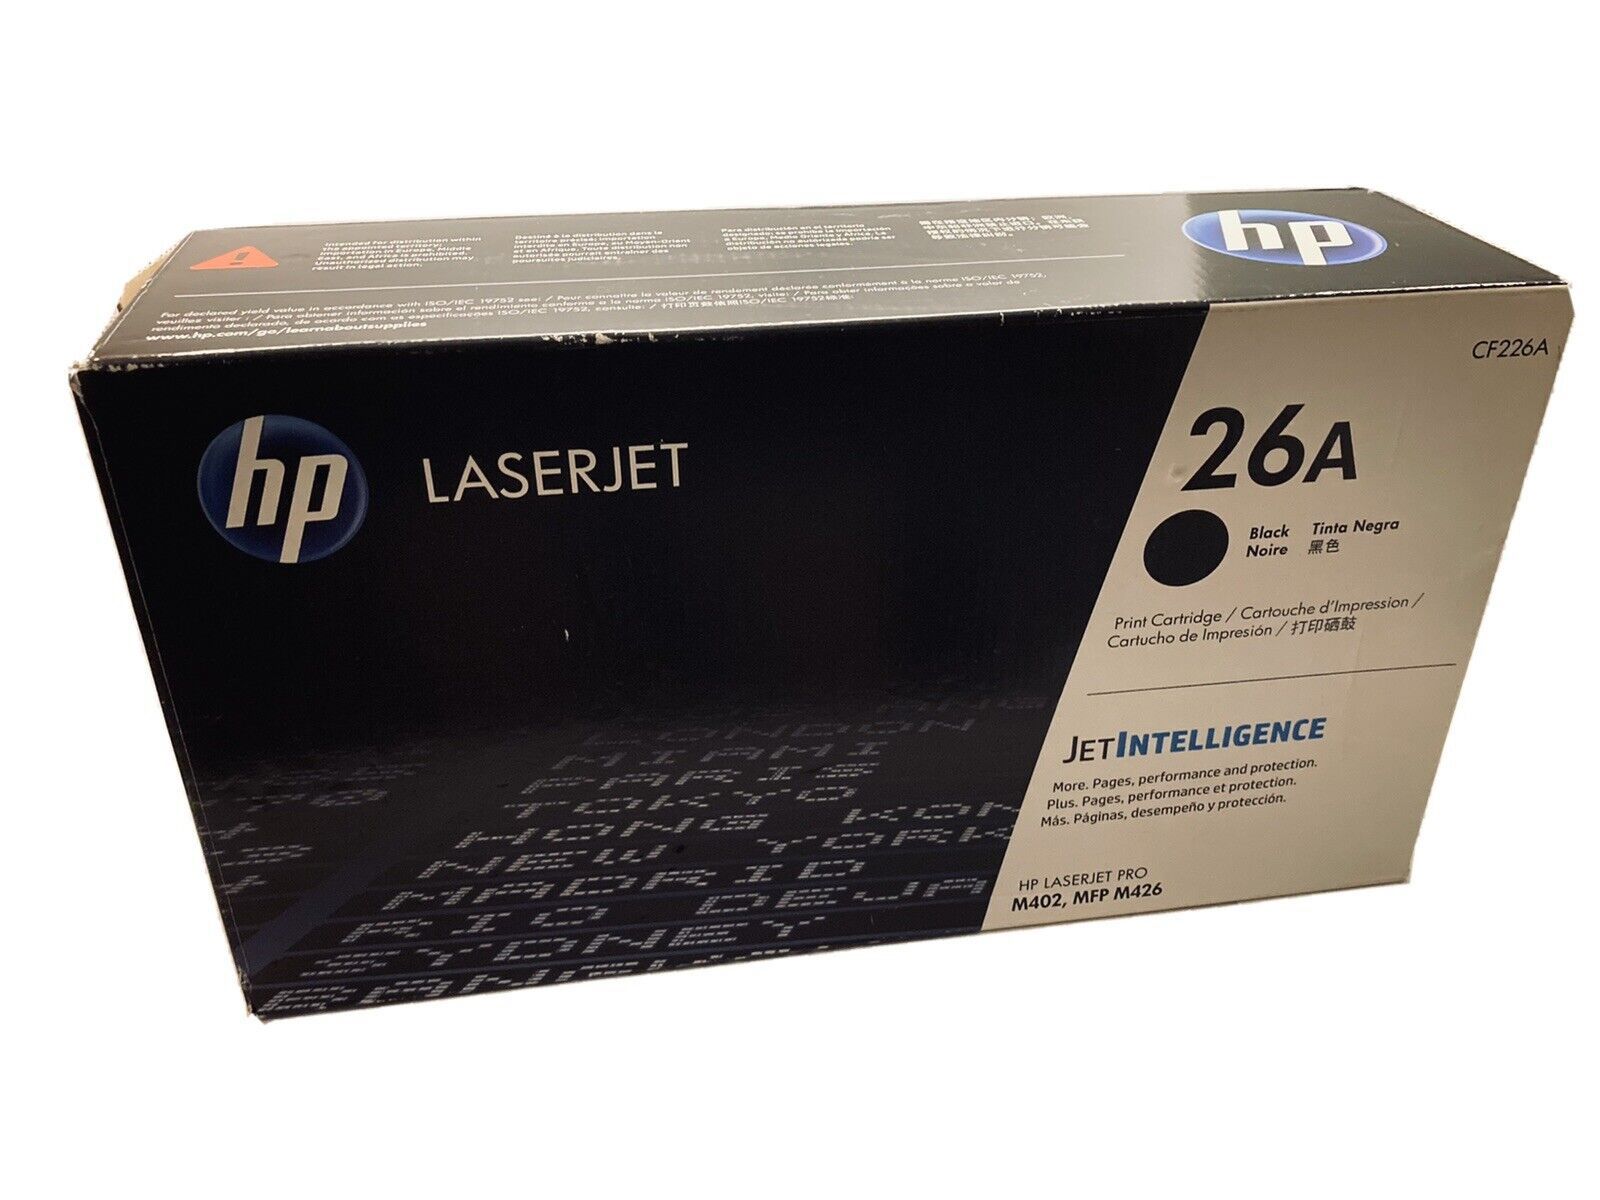 HP LASERJET 26A Toner Cartridges for Sale New - OfferUp